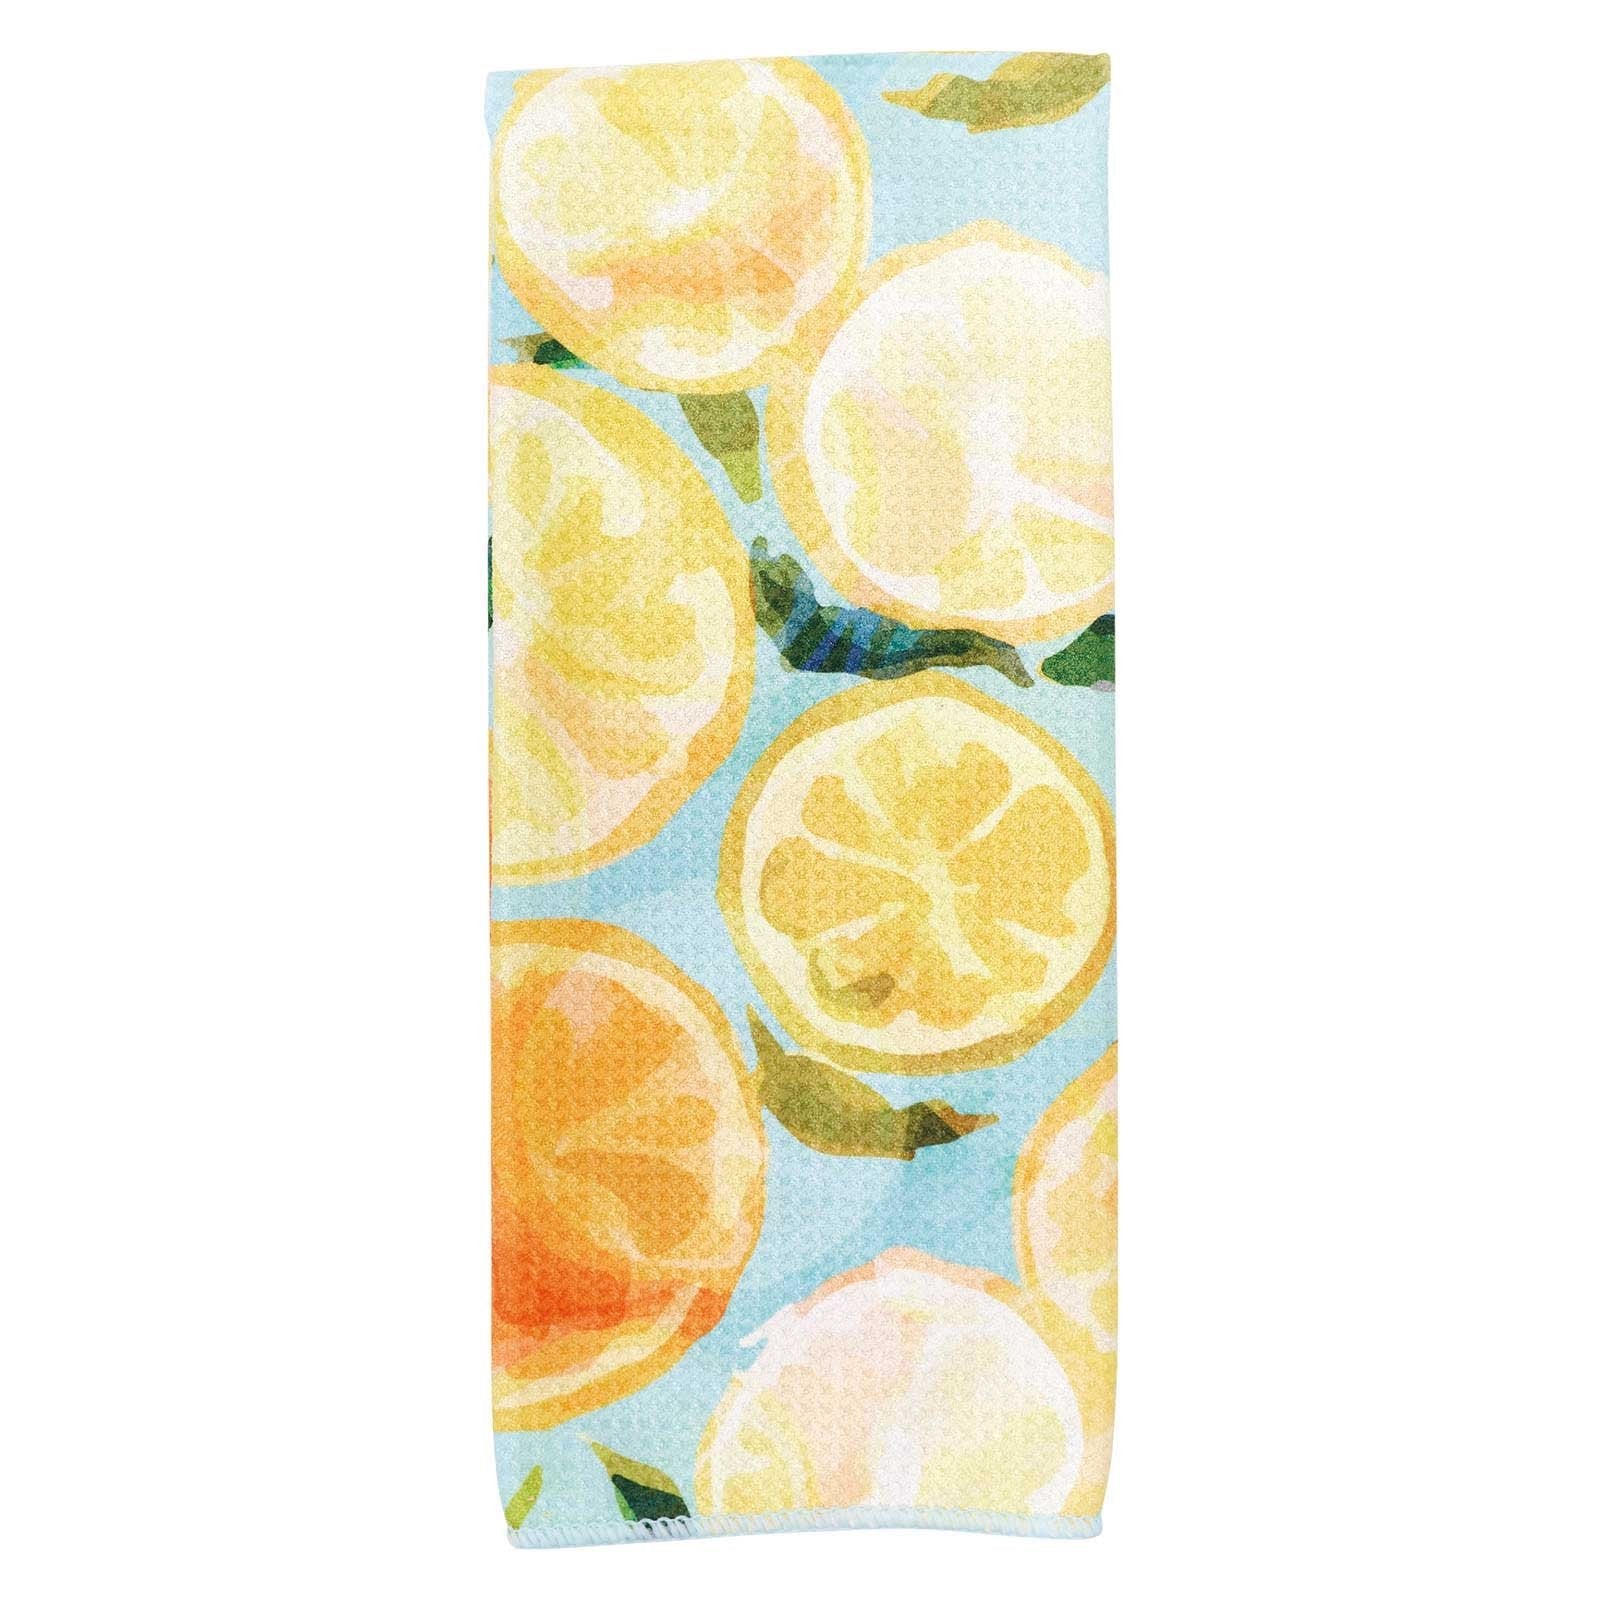 Lemon Slices Blu Kitchen Tea Towel Kitchen Towel - rockflowerpaper